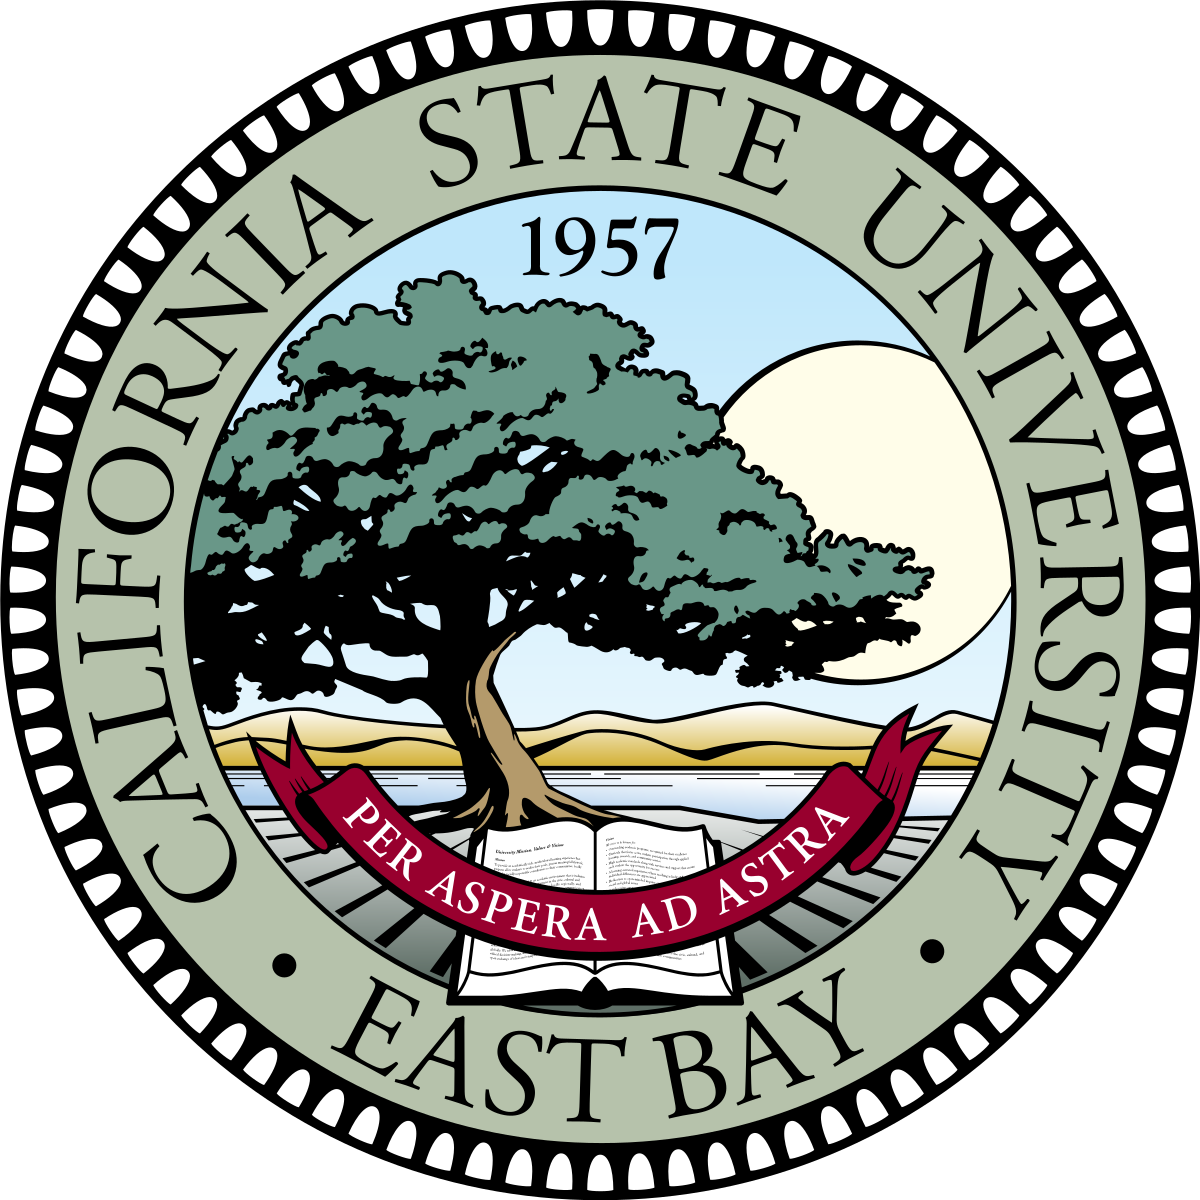 California State University, East Bay